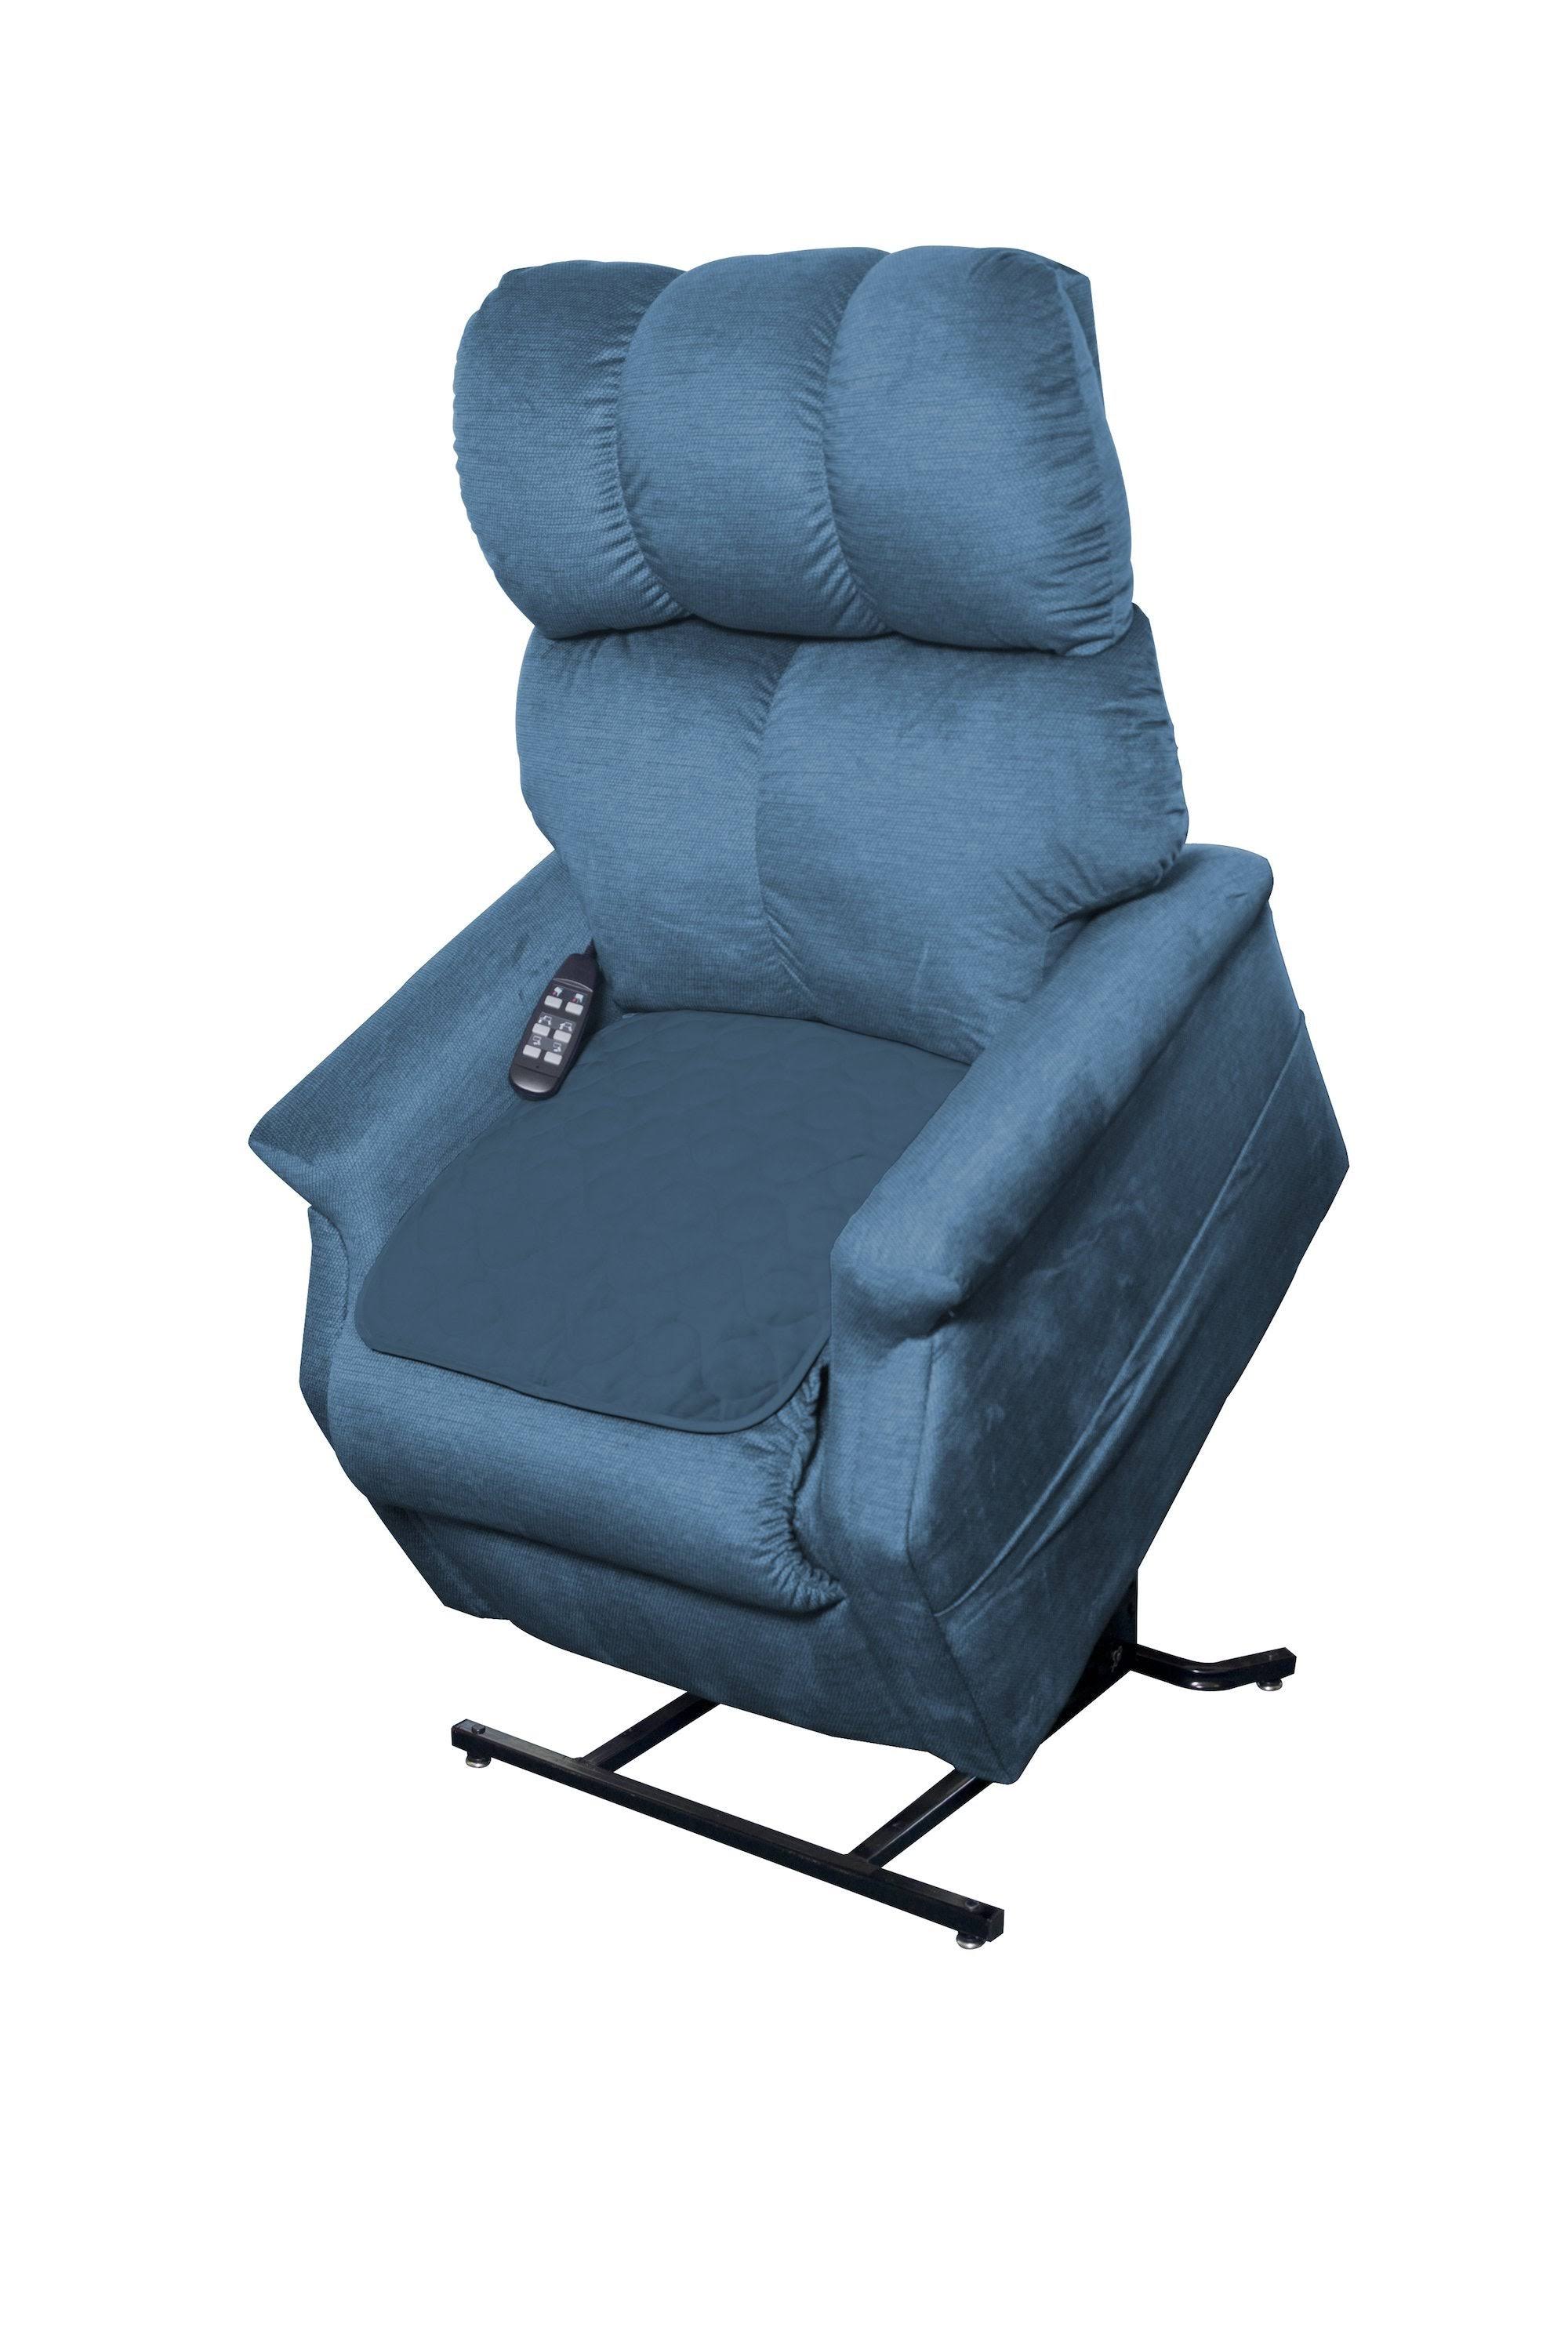 Essential Medical Supply C2500B Furniture Protector Pad - Blue